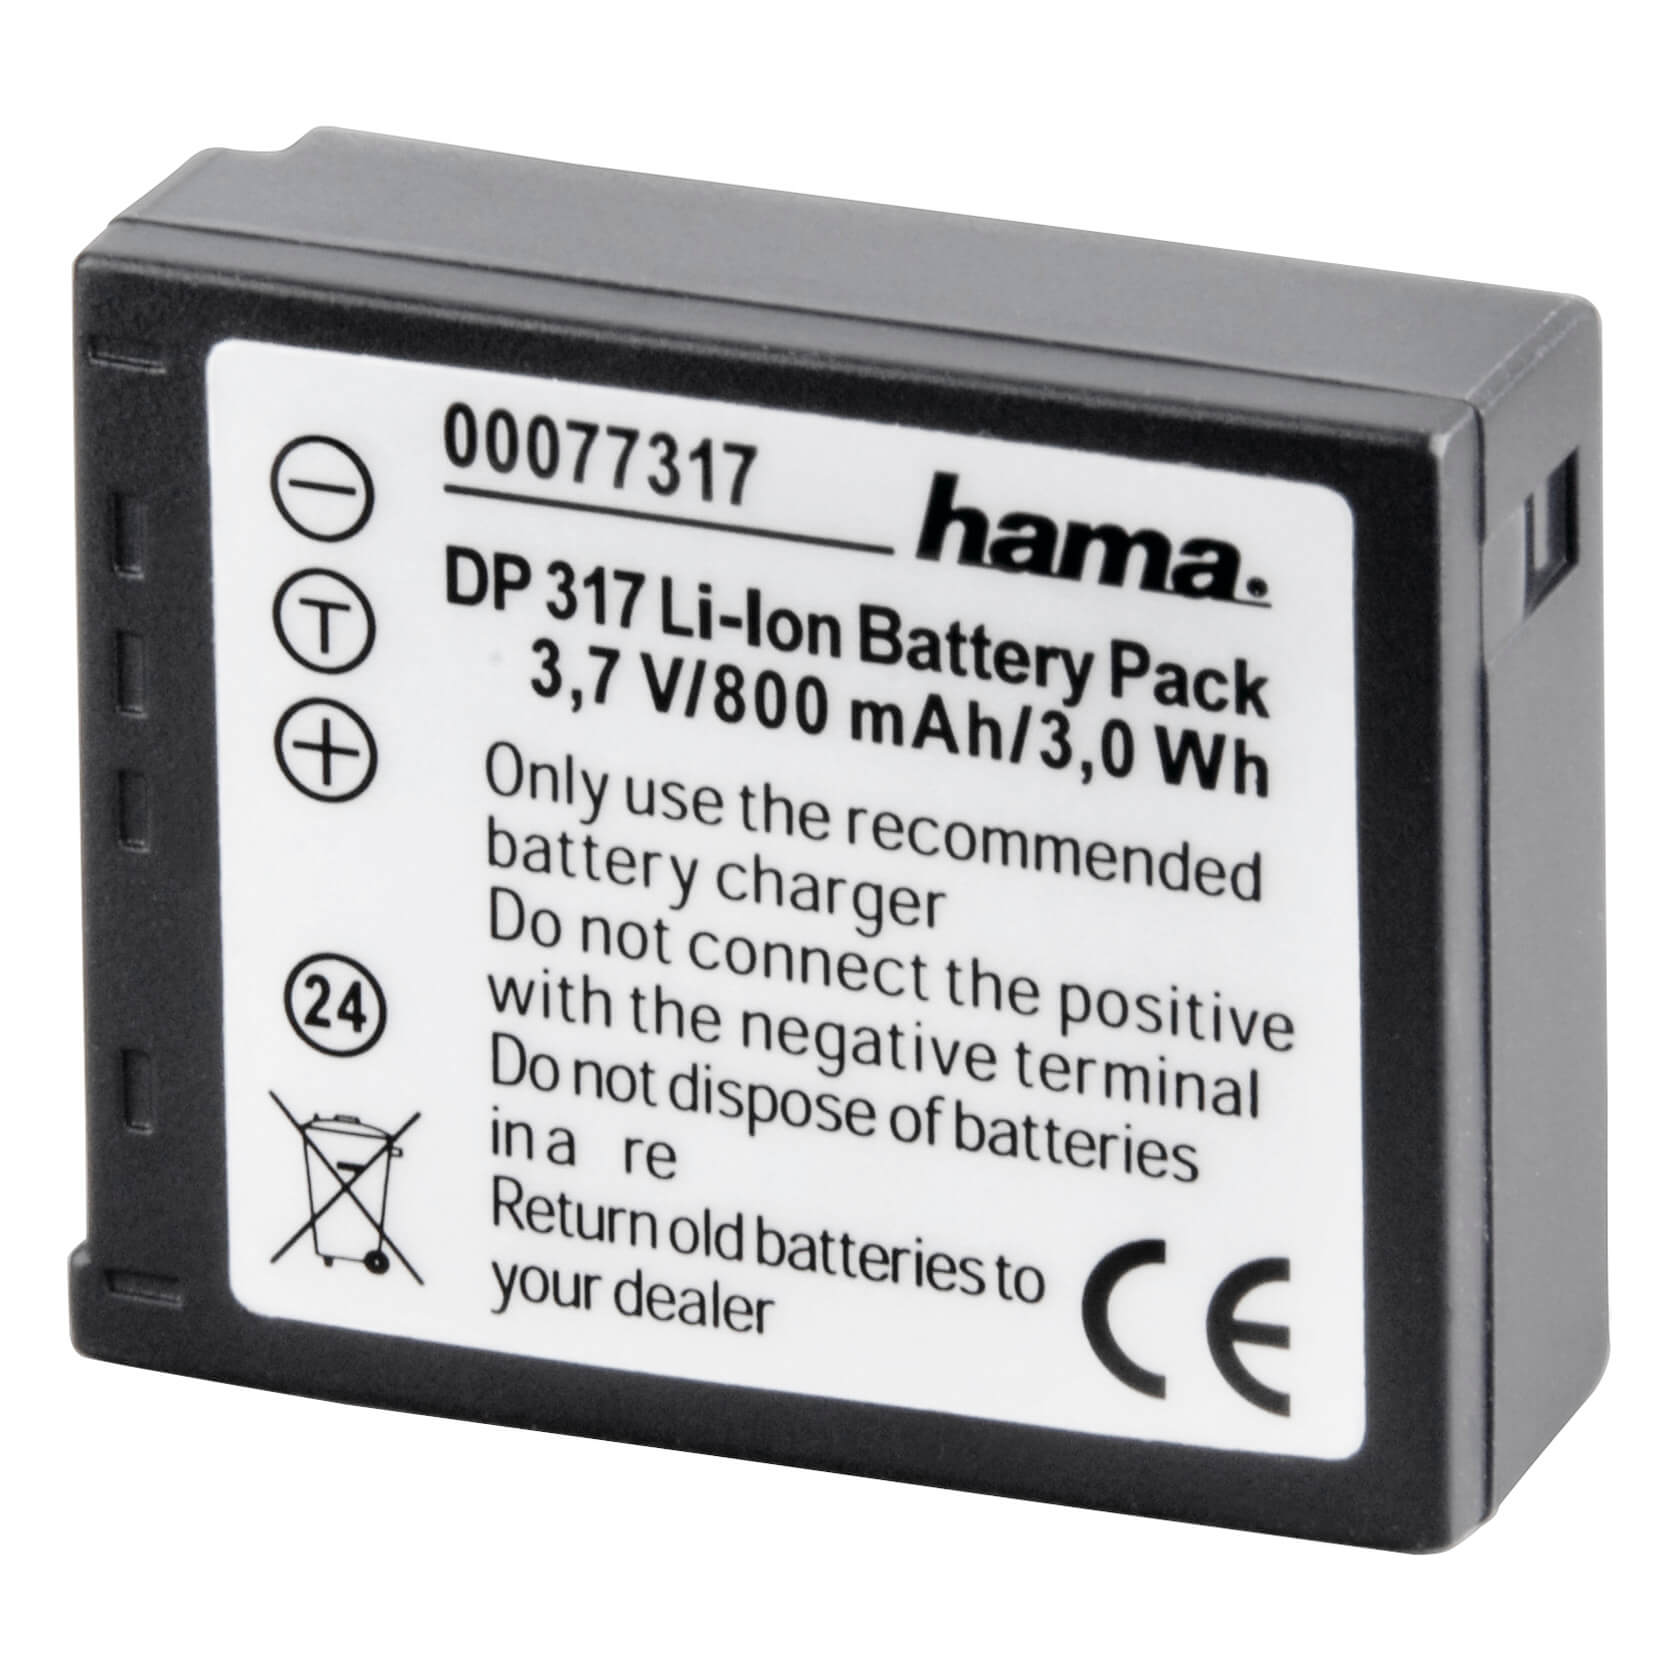 DP 317 Li-Ion Battery for Pan asonic CGA-S007E